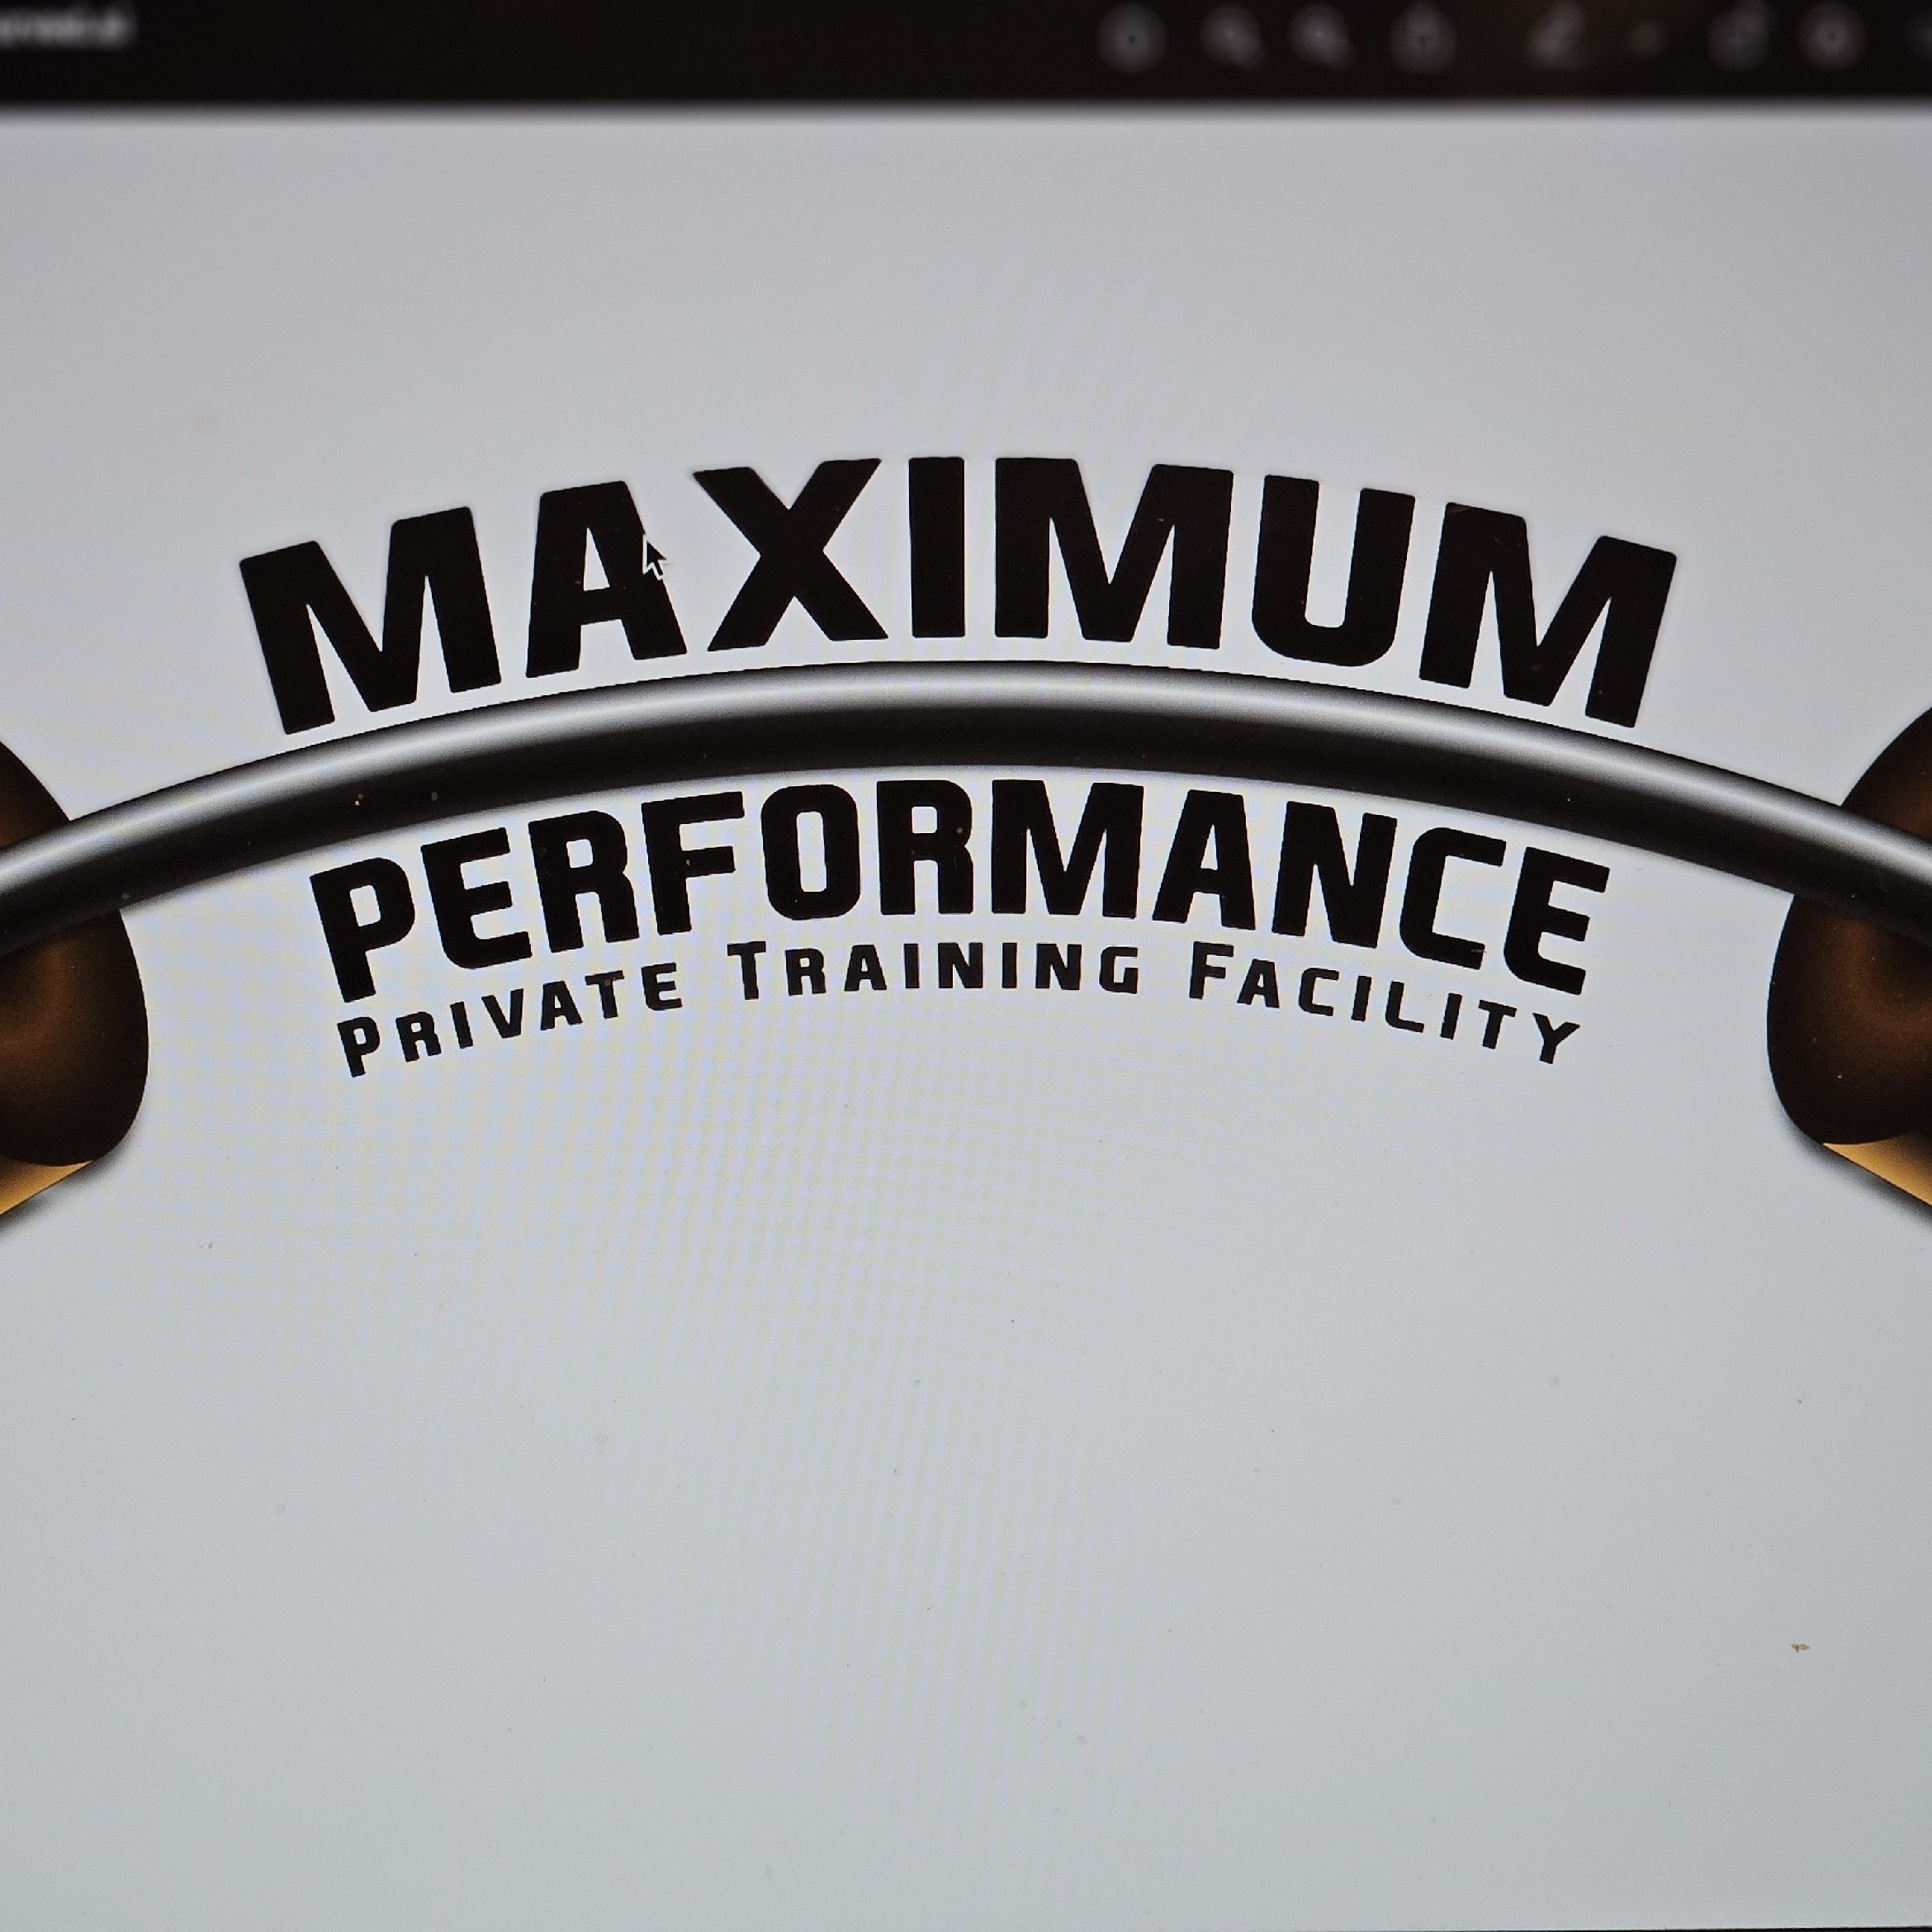 Maximum  Performance, 21144 Ventura Blvd, Woodland Hills, Woodland Hills 91364